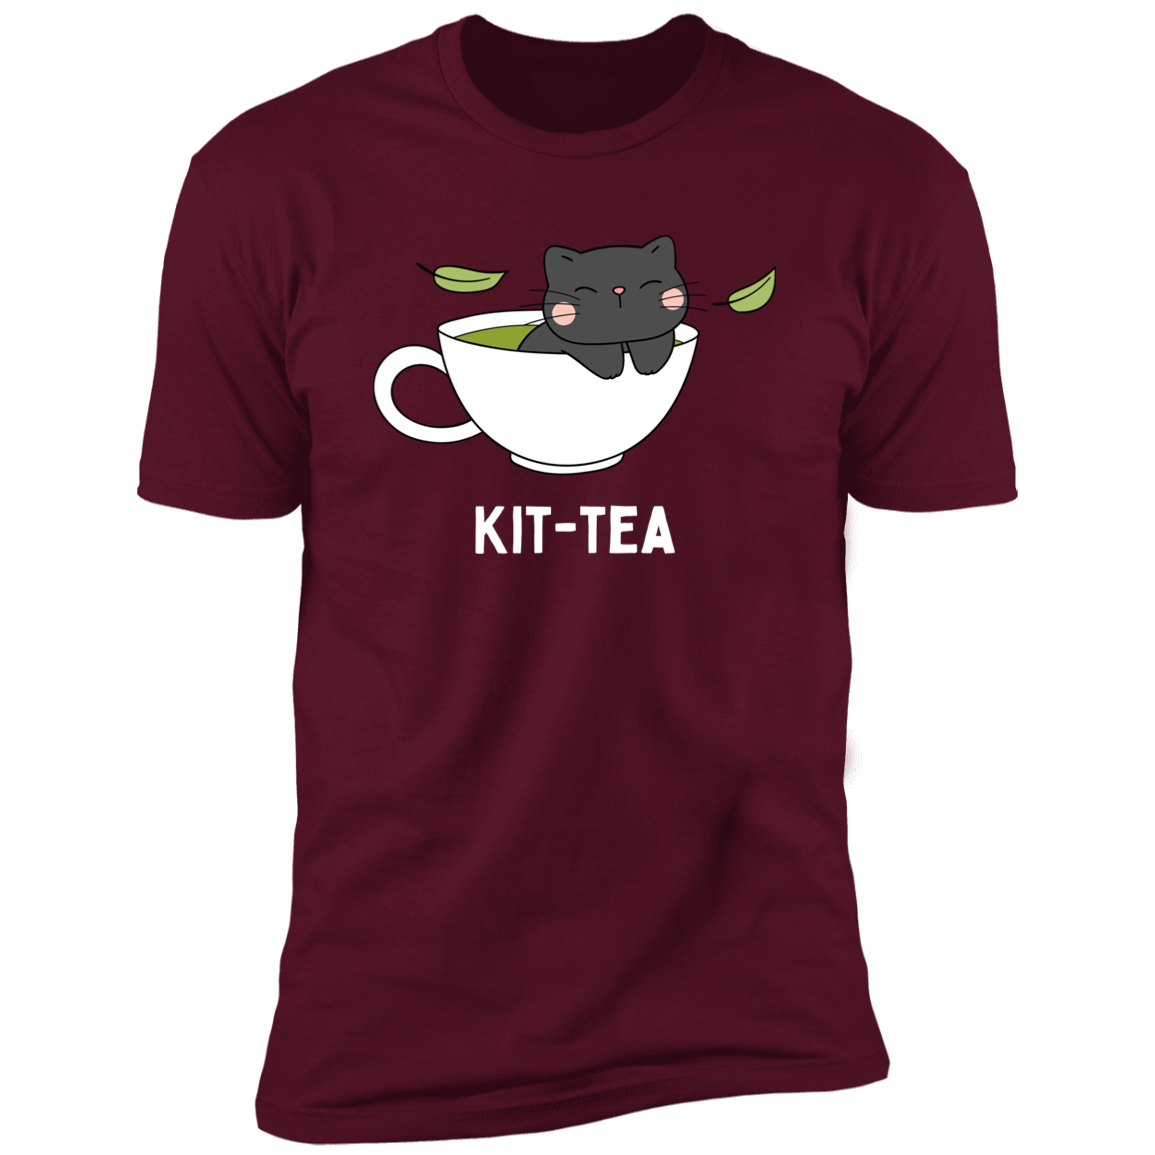 Kitt-Tea T-Shirt, kitty tea shirt, Cat Shirt for humans, funny cat shirt, in maroon